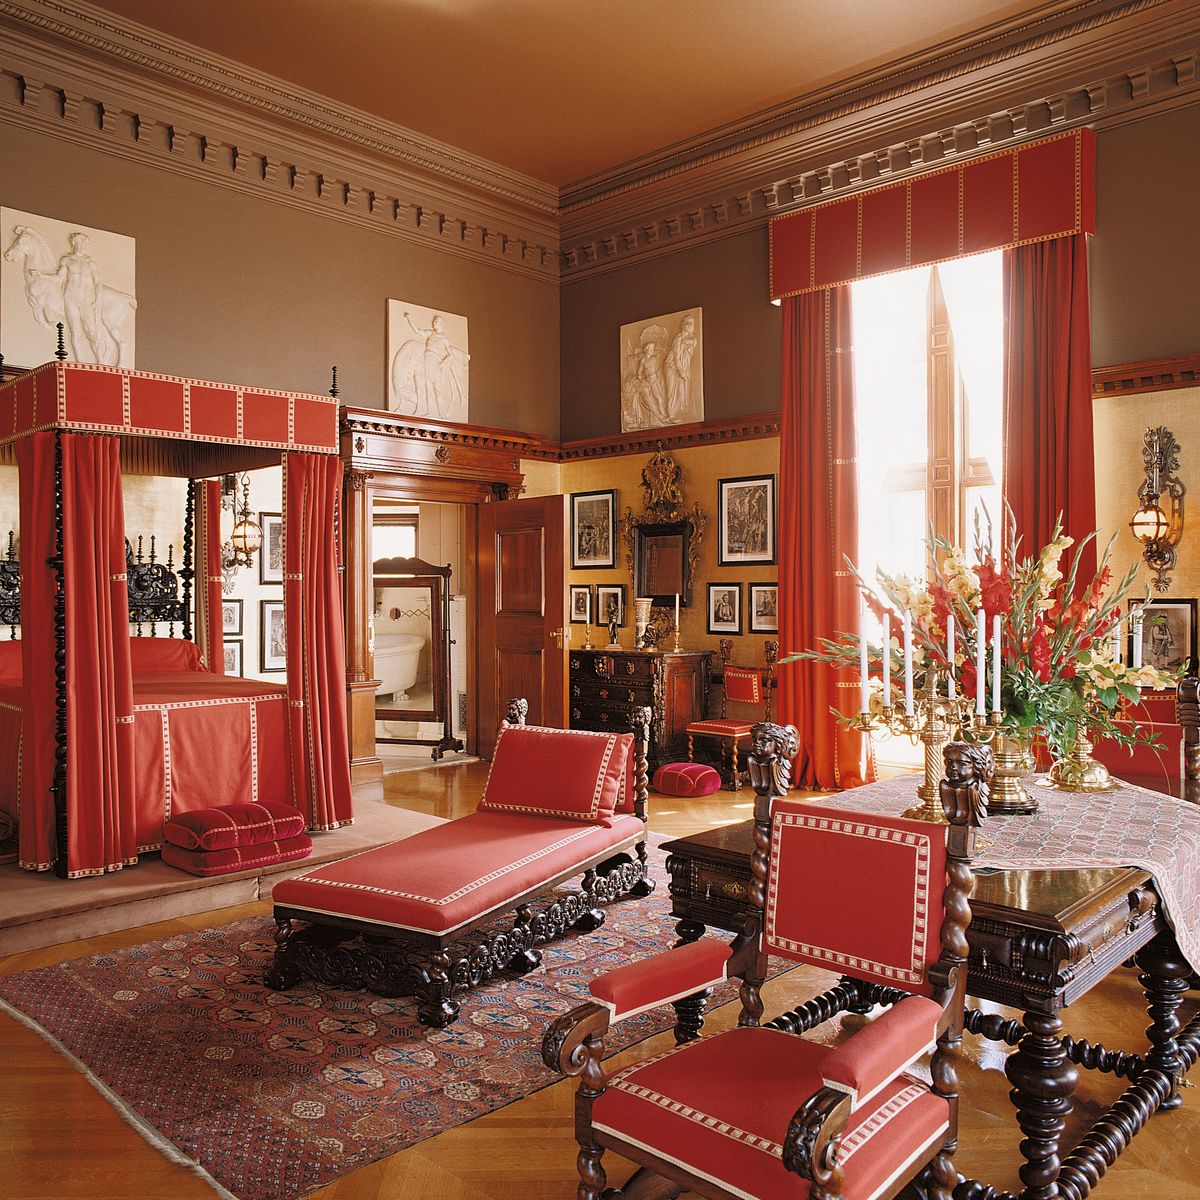 George Vanderbilt's Bedroom